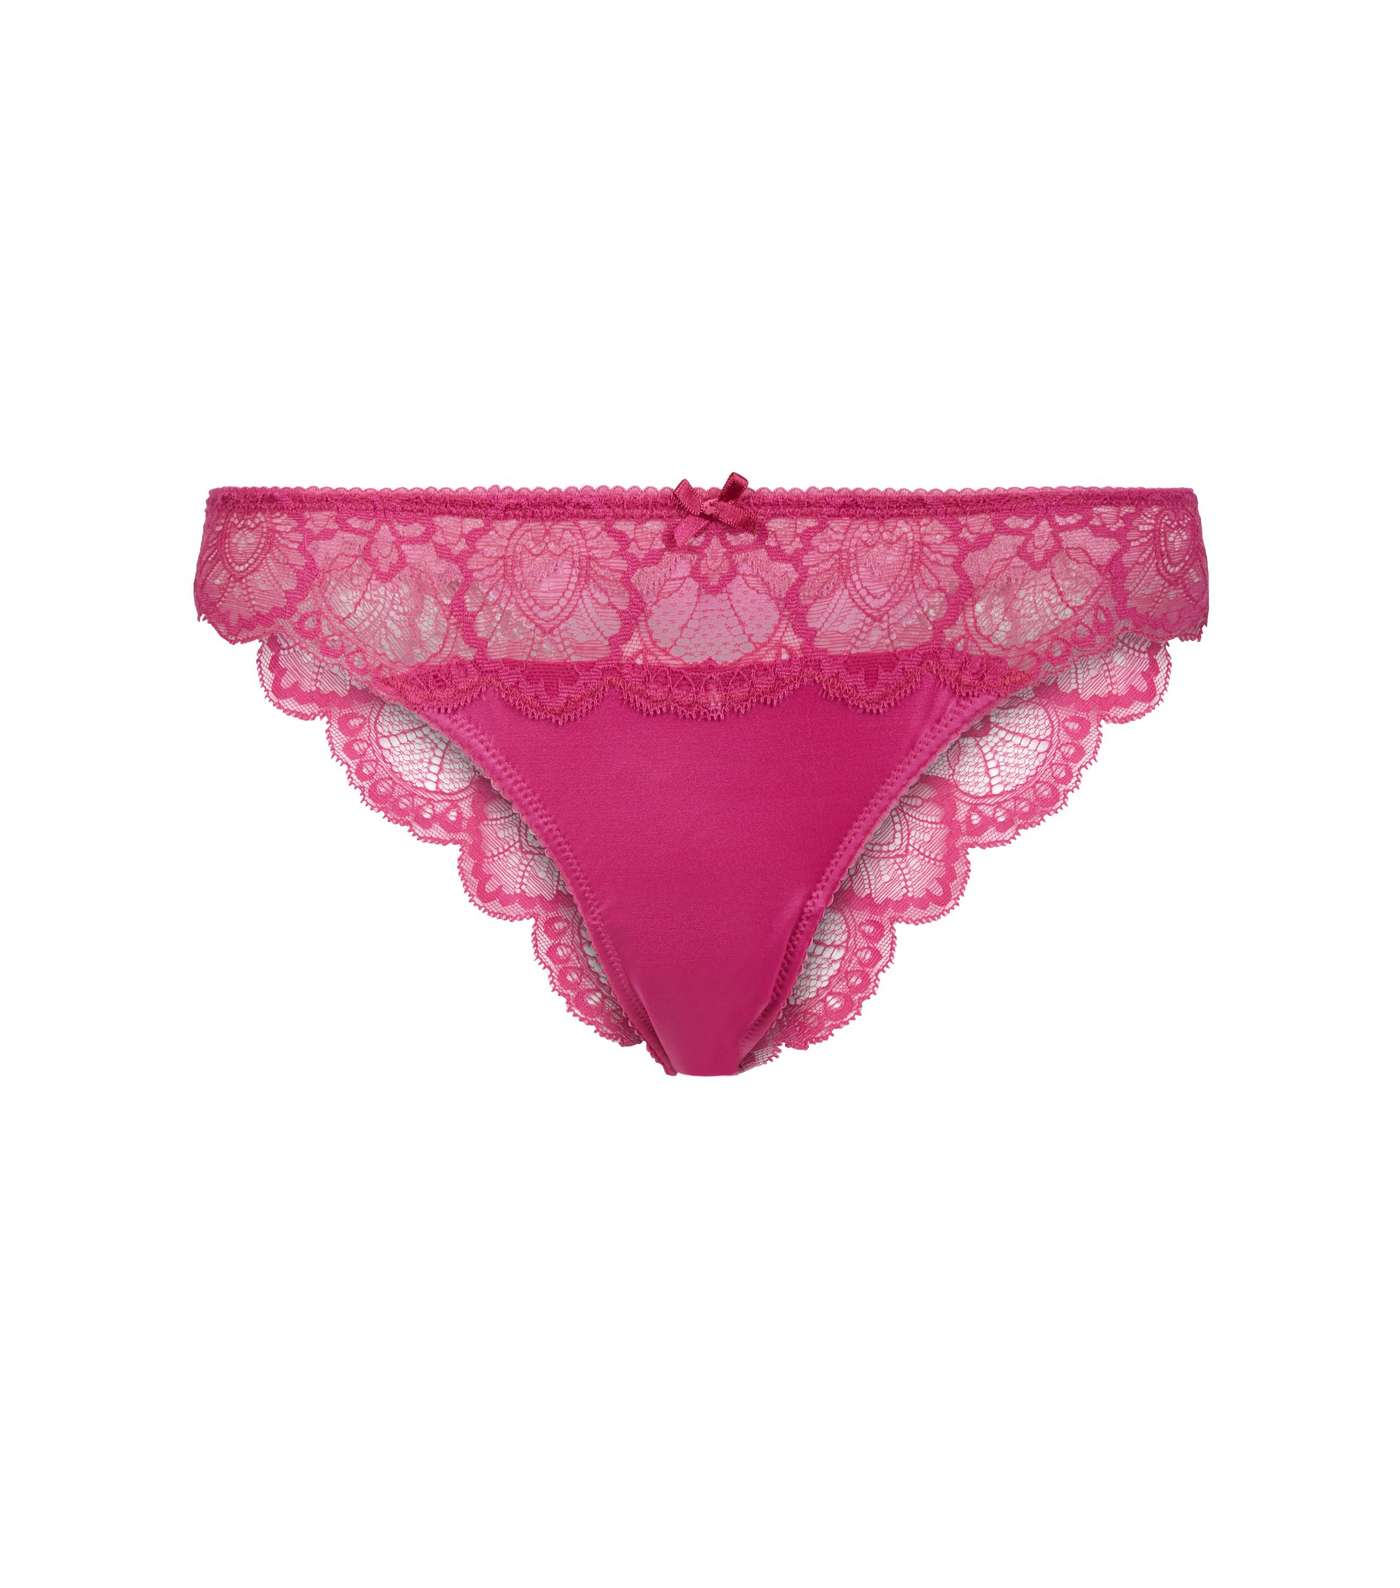 Bright Pink Satin Lace Brazilian Briefs Image 3